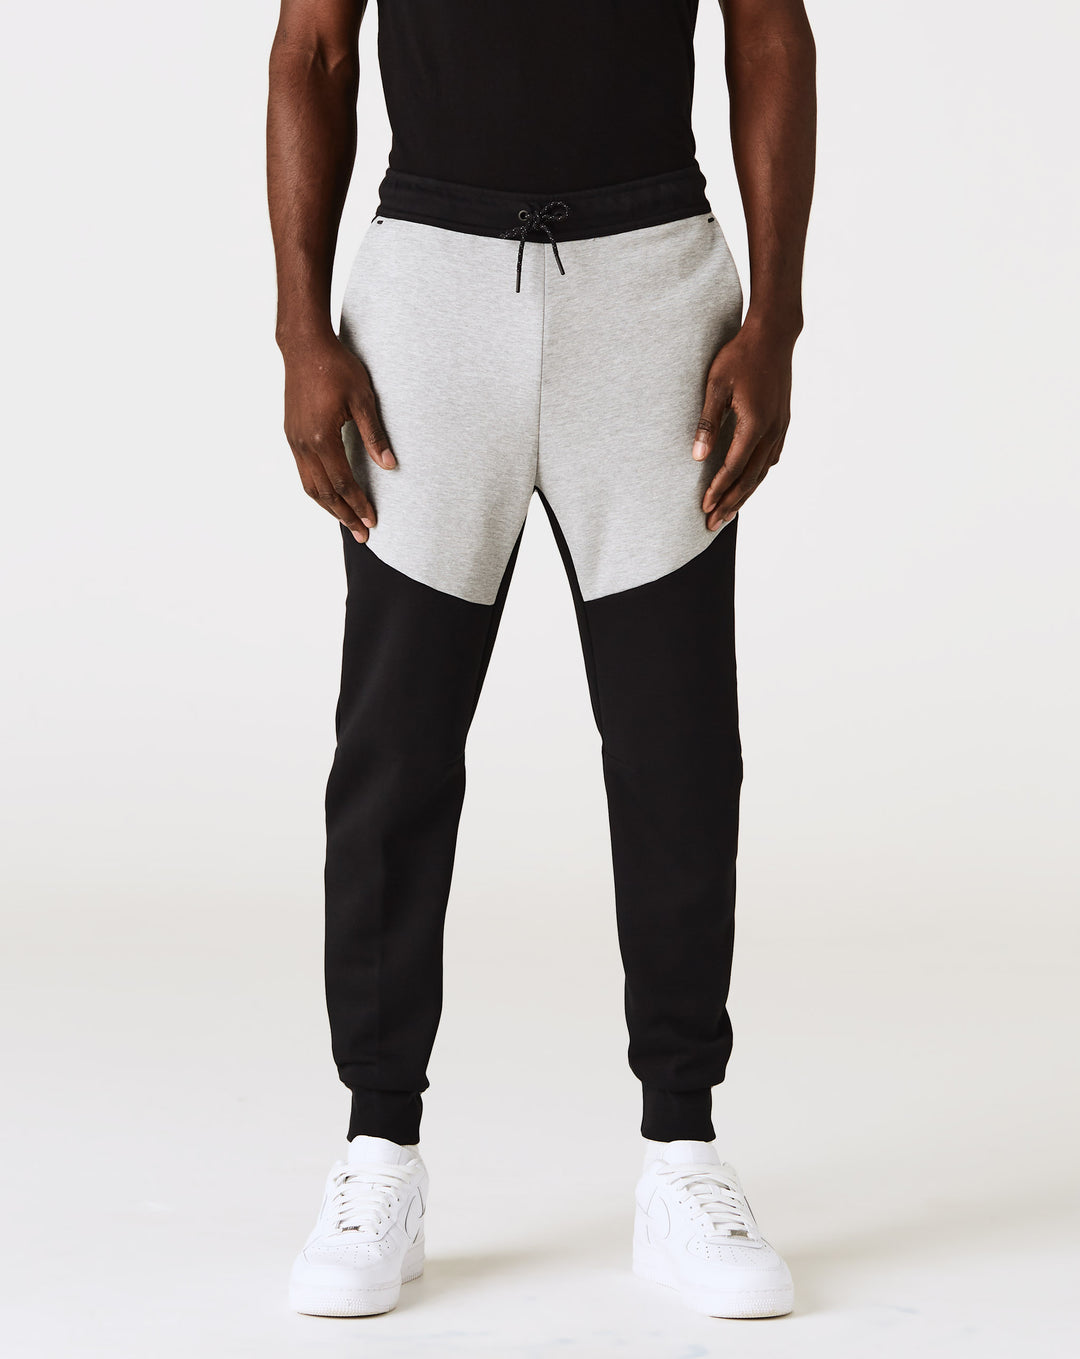 Nike - Tech Fleece Pants - Black, Dark Grey Heather